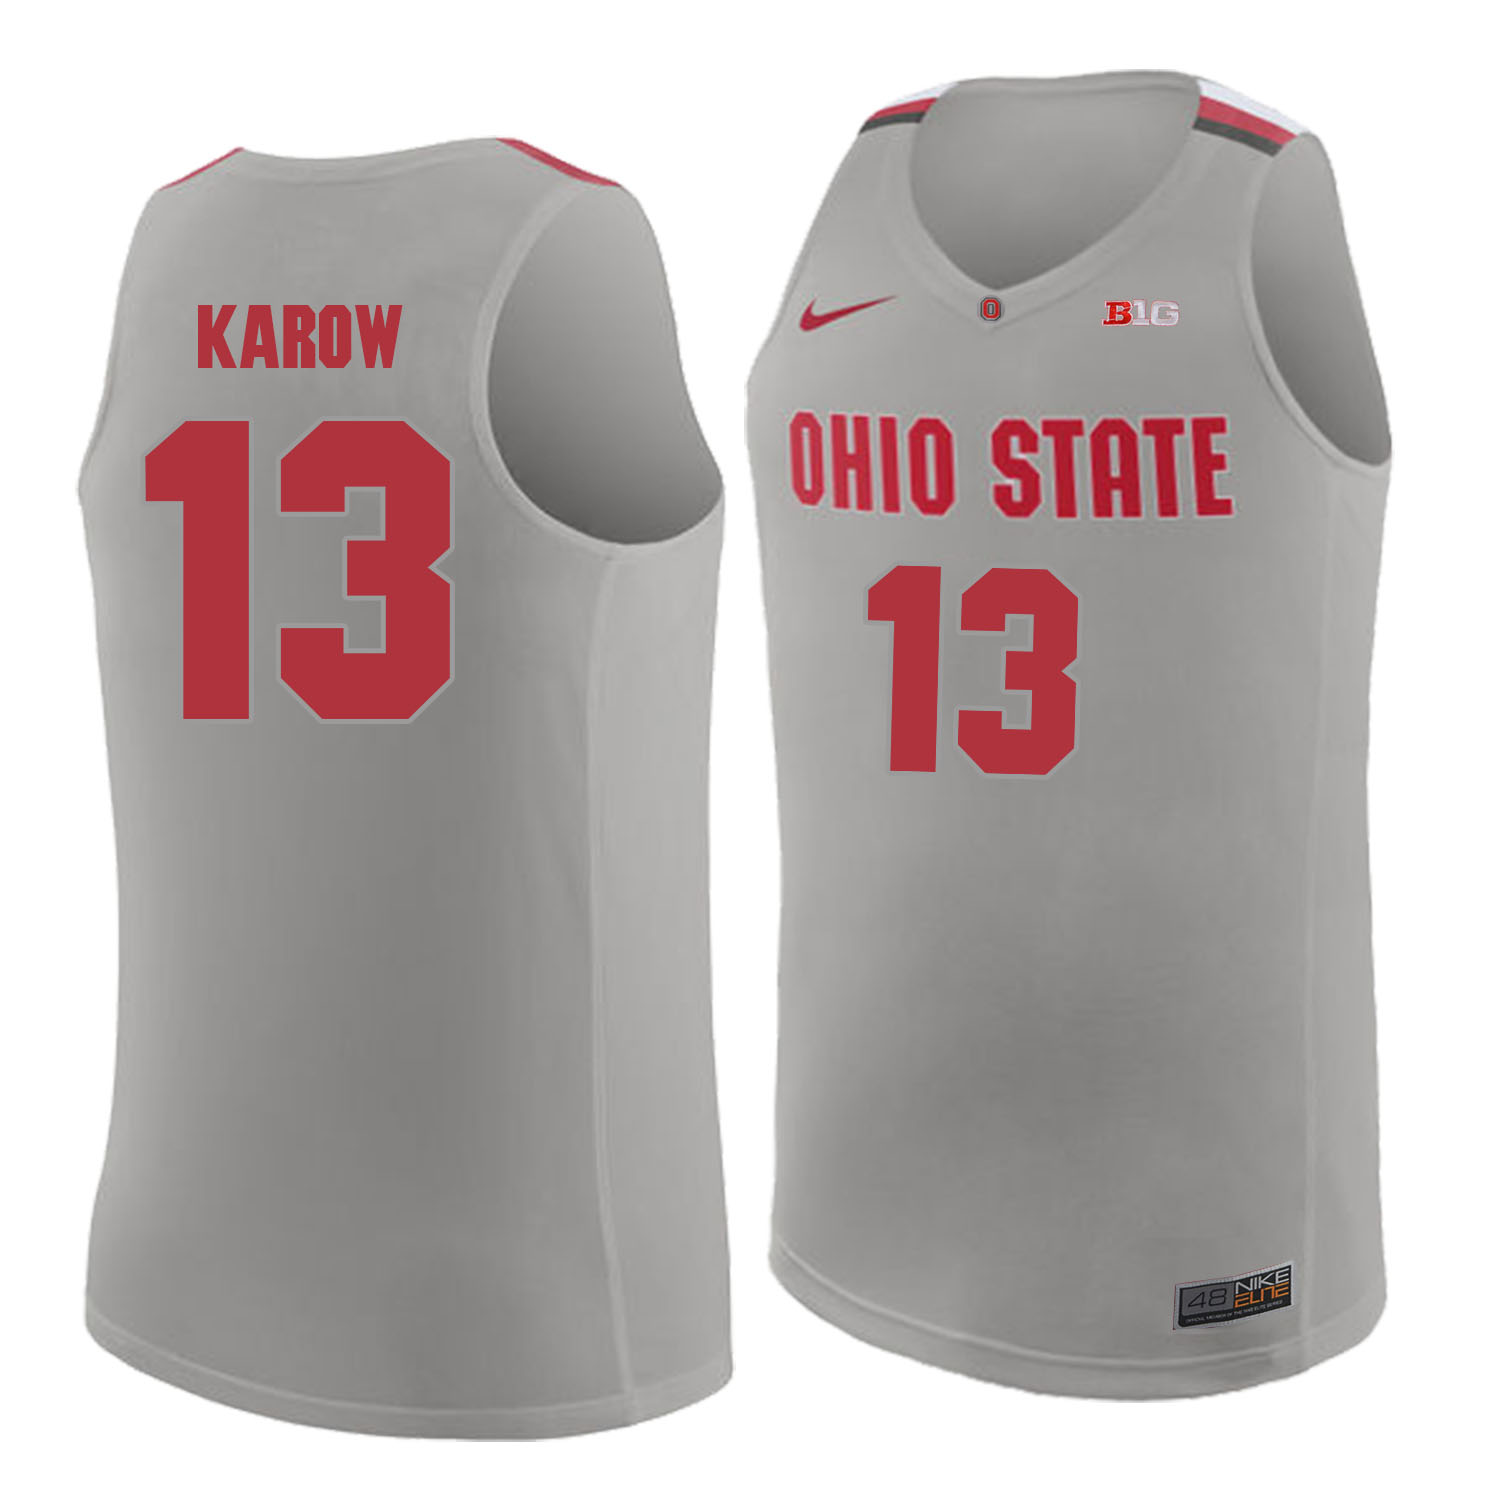 Ohio State Buckeyes 13 Marty Karow Gray College Basketball Jersey